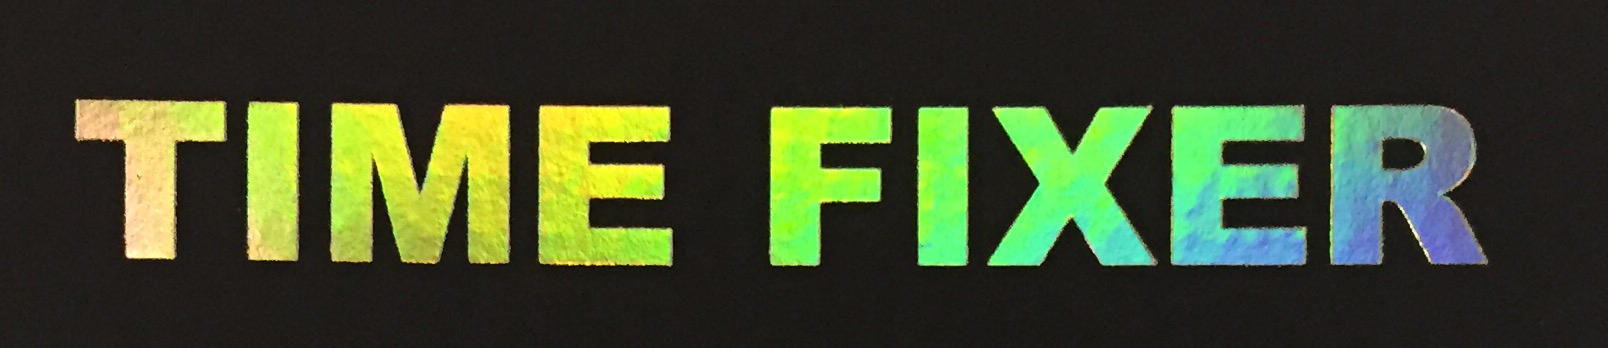 TIME FIXER logo image